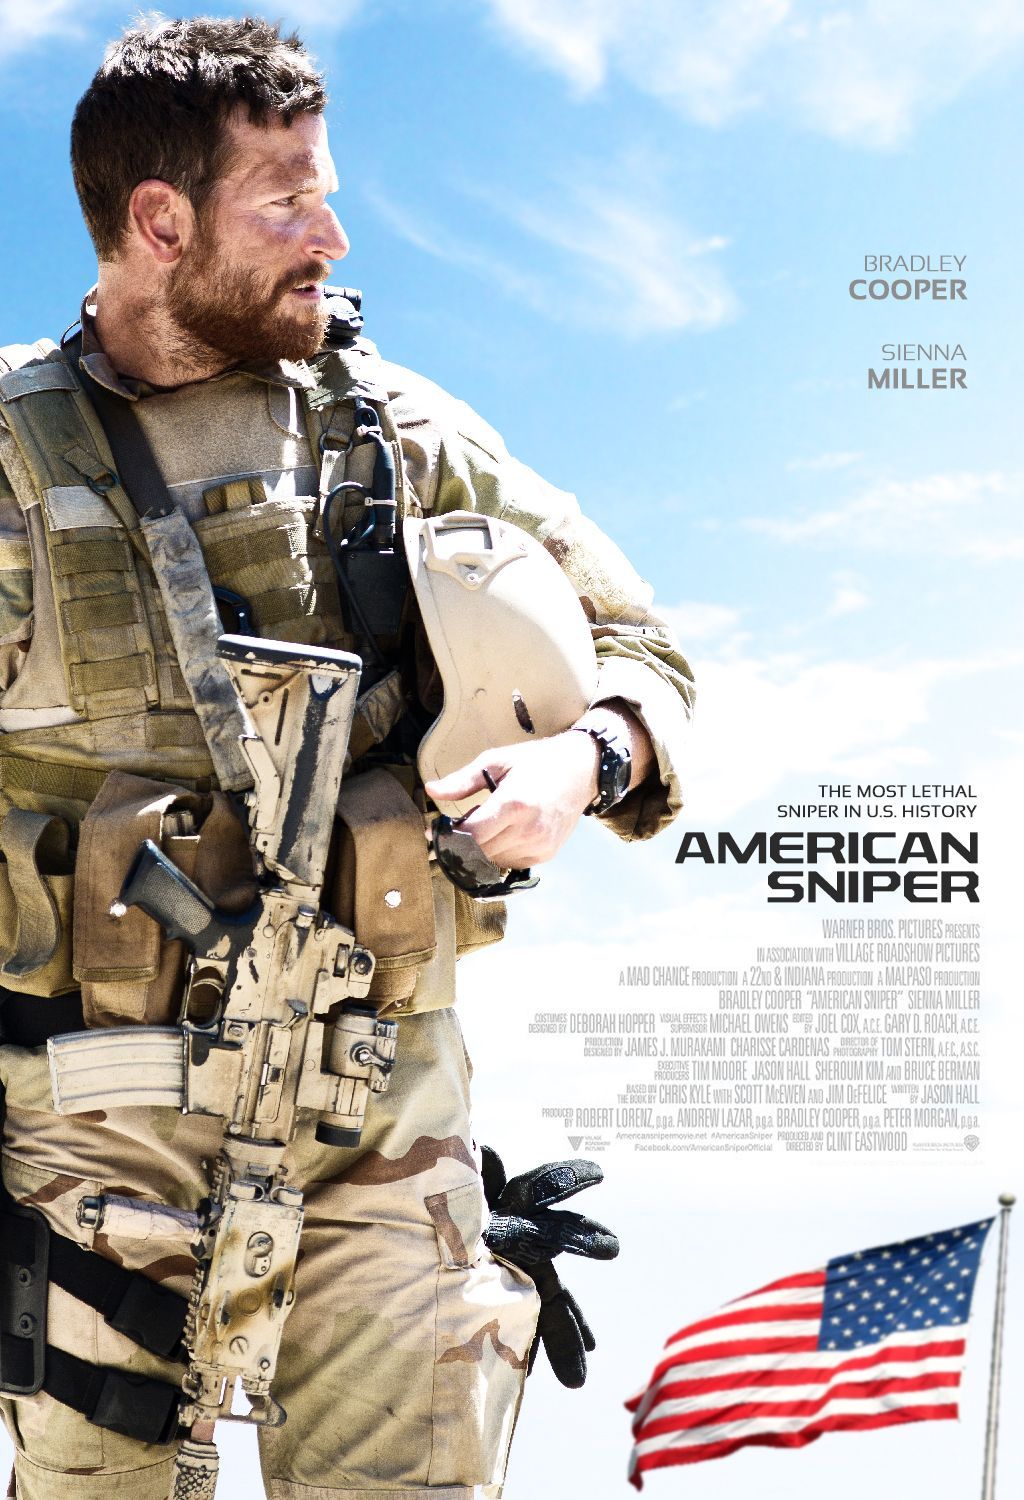 American Sniper Wallpaper. Futuristic Sniper Wallpaper, American Sniper Wallpaper and Black Ops 2 Sniper Wallpaper